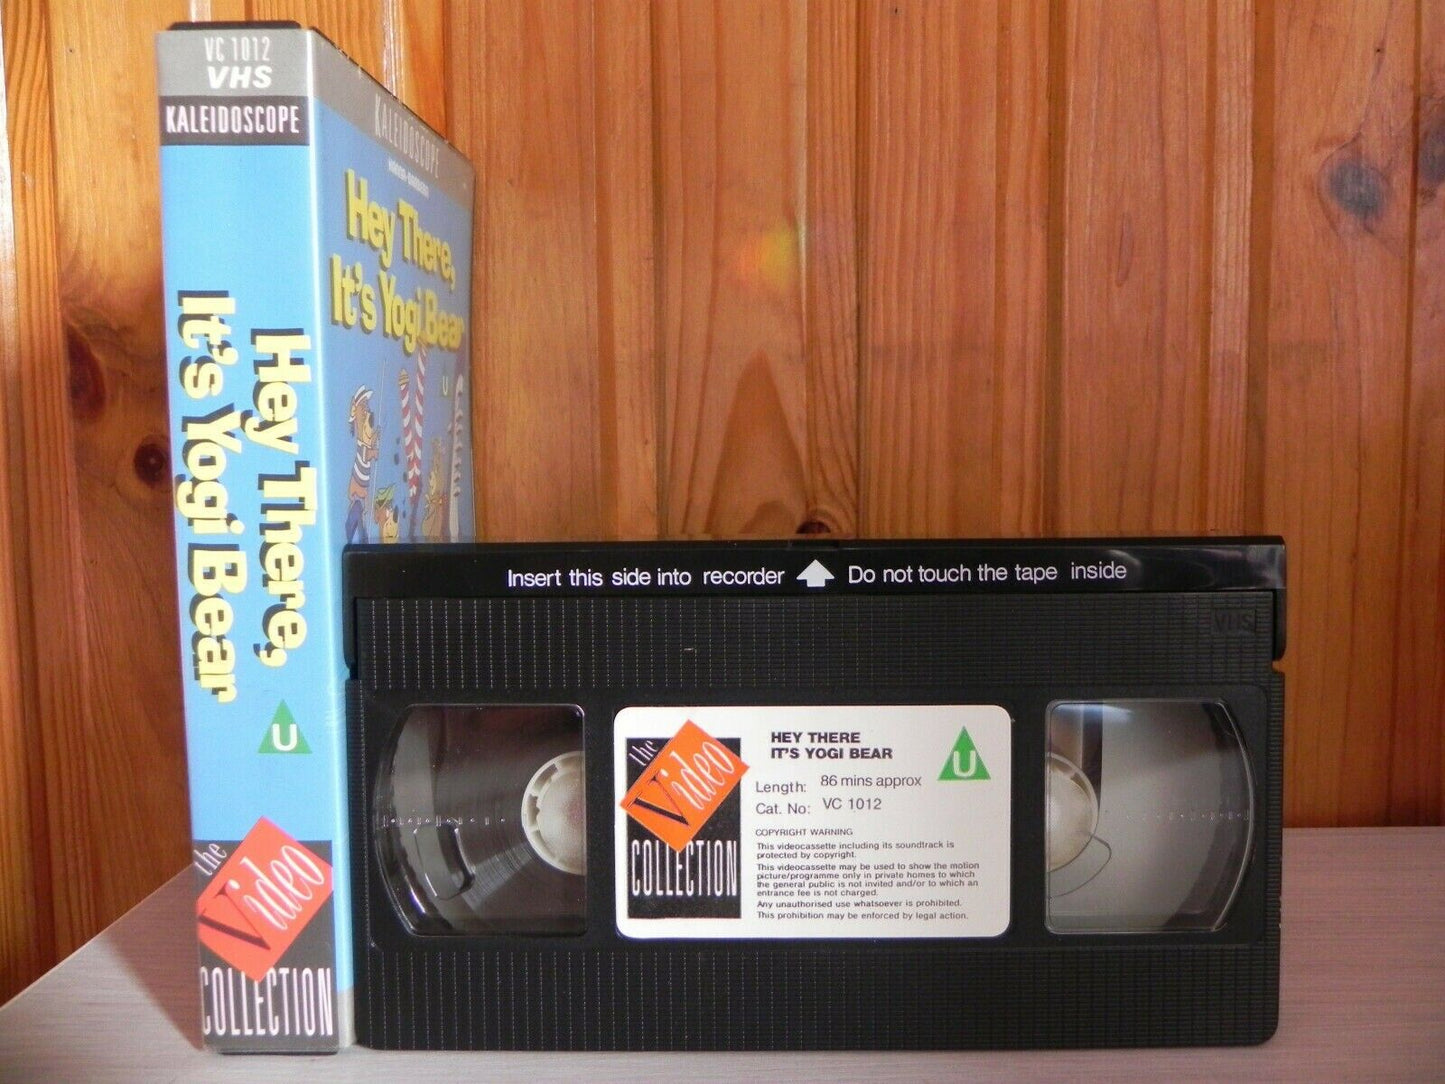 Hey There It's Yogi Bear - Hanna Barbera - Animated Adventutes - Kids - Pal VHS-